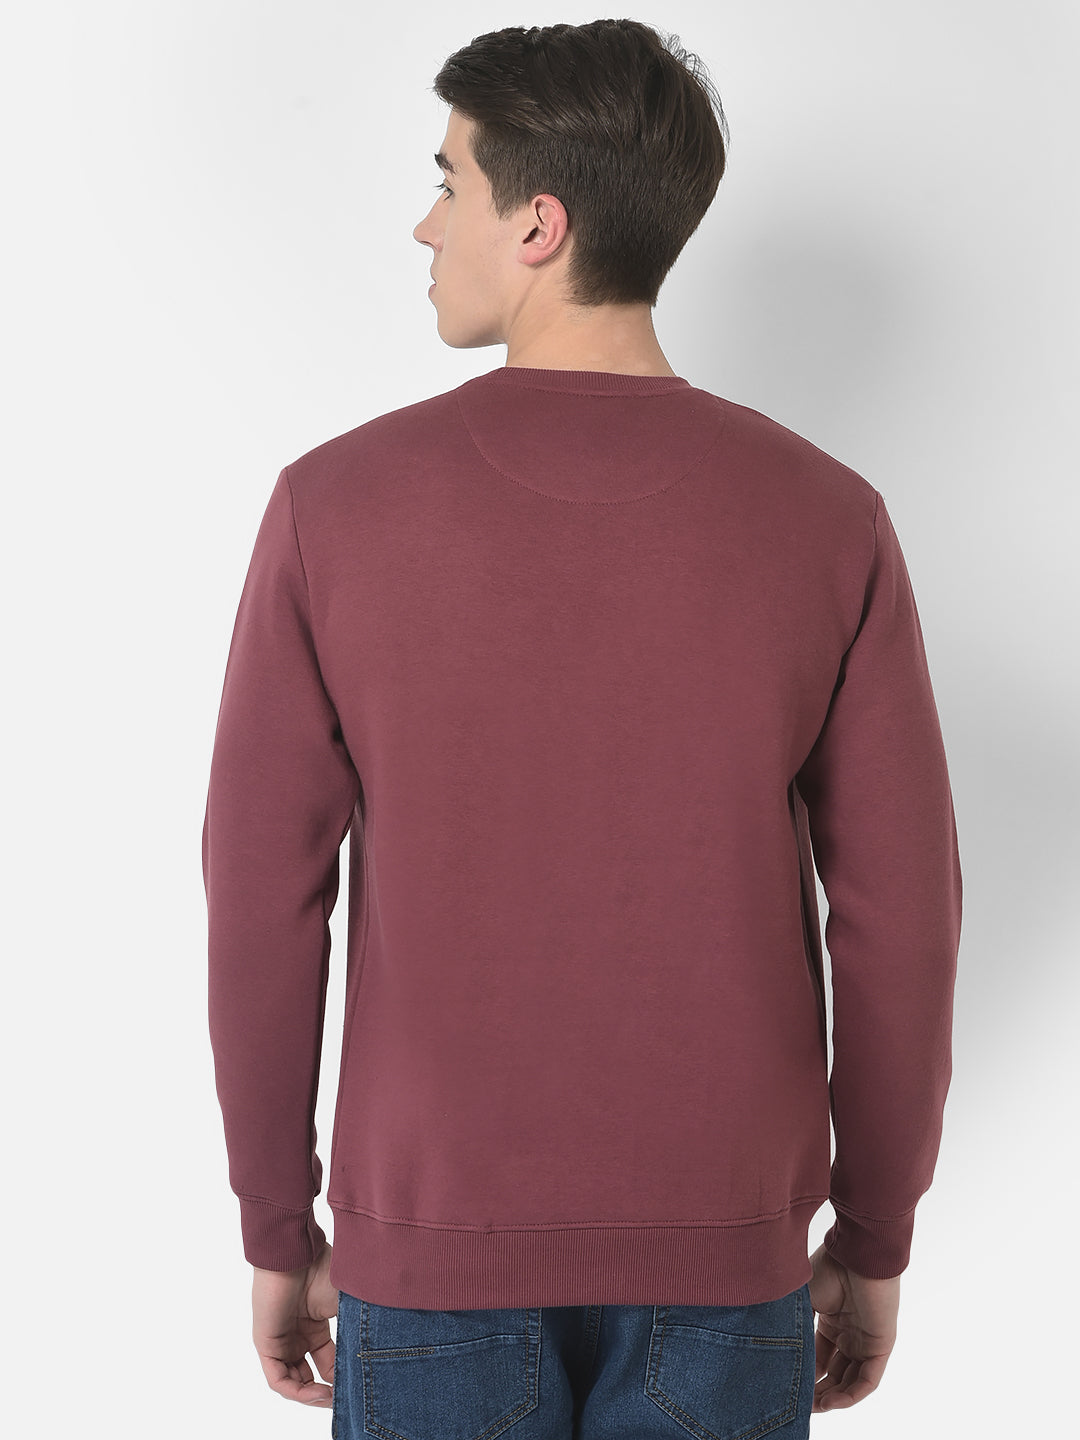 Cobb Maroon Printed Round Neck Sweatshirt